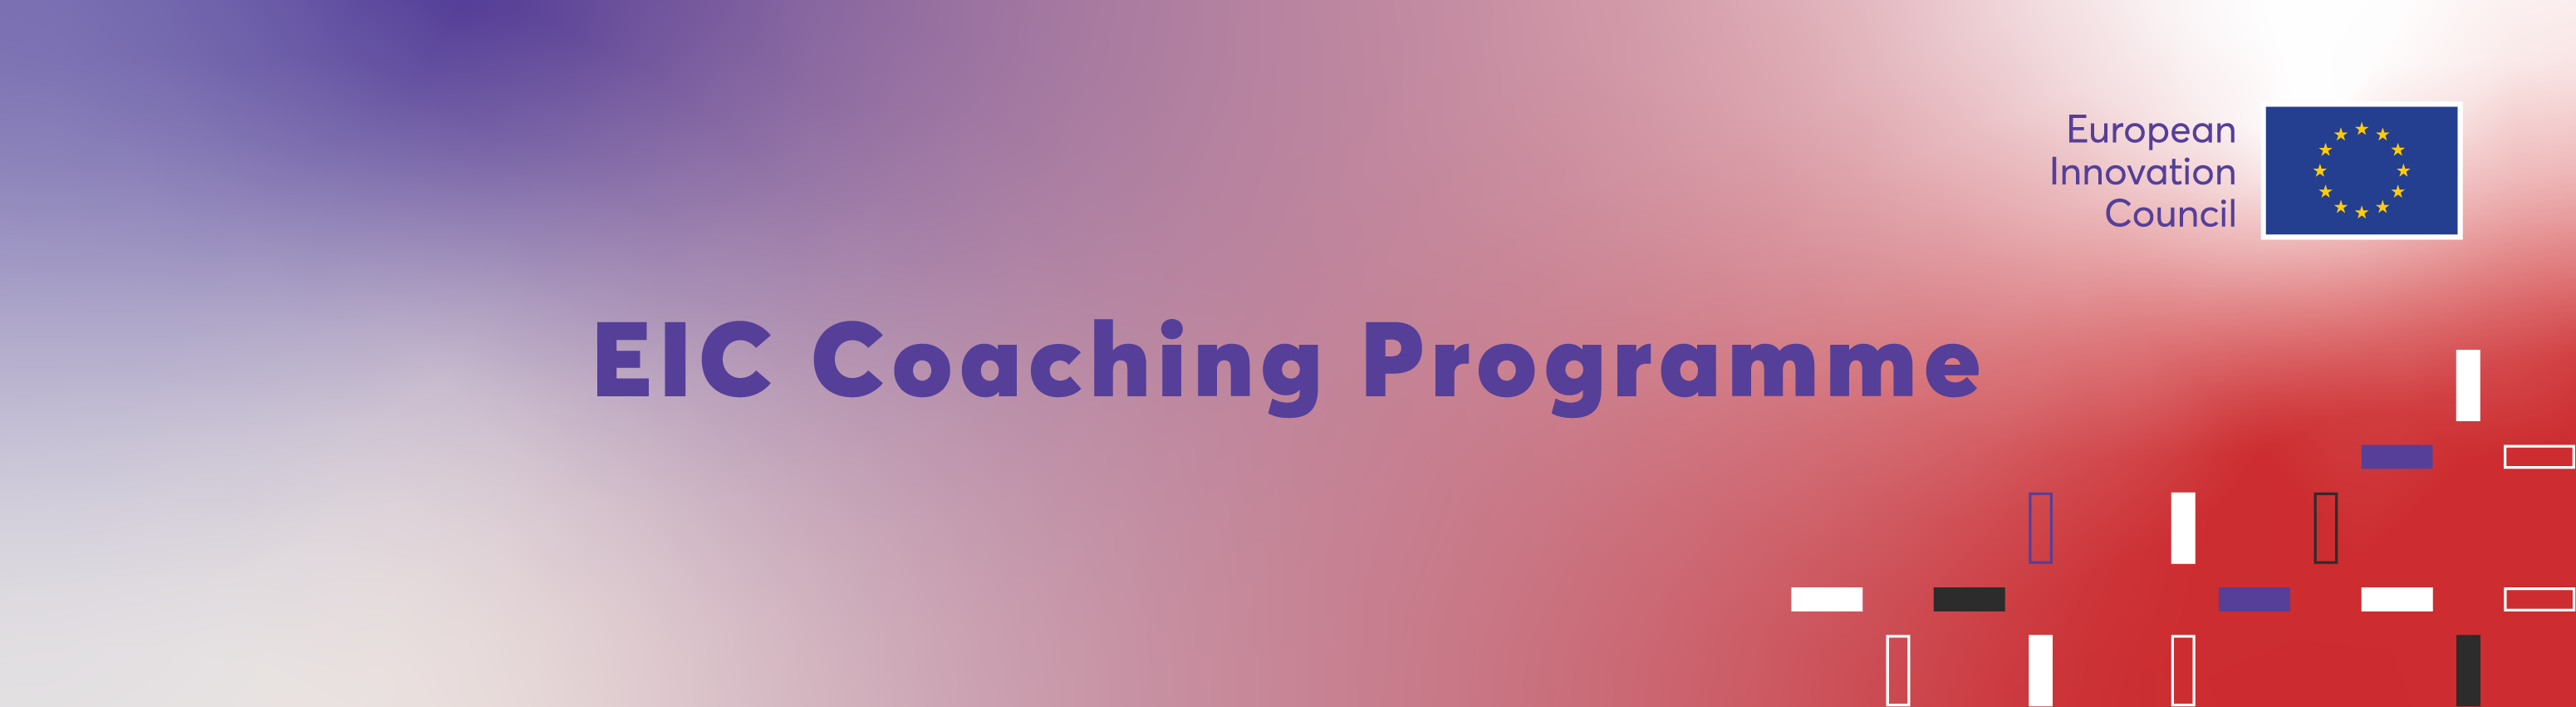 EIC Coaching Programme